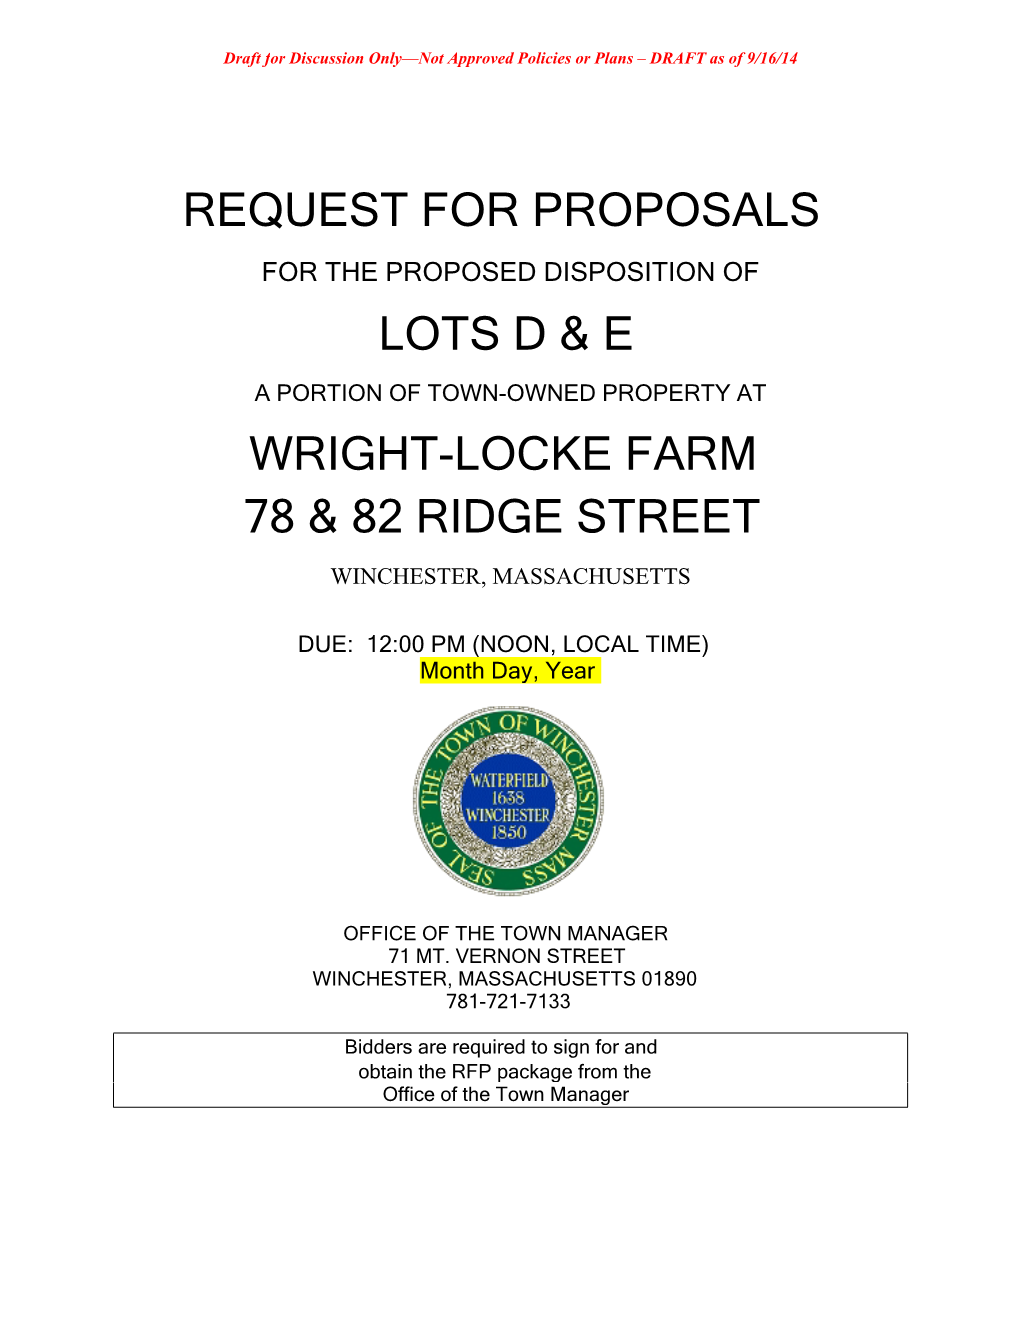 Request for Proposals Lots D & E Wright-Locke Farm 78